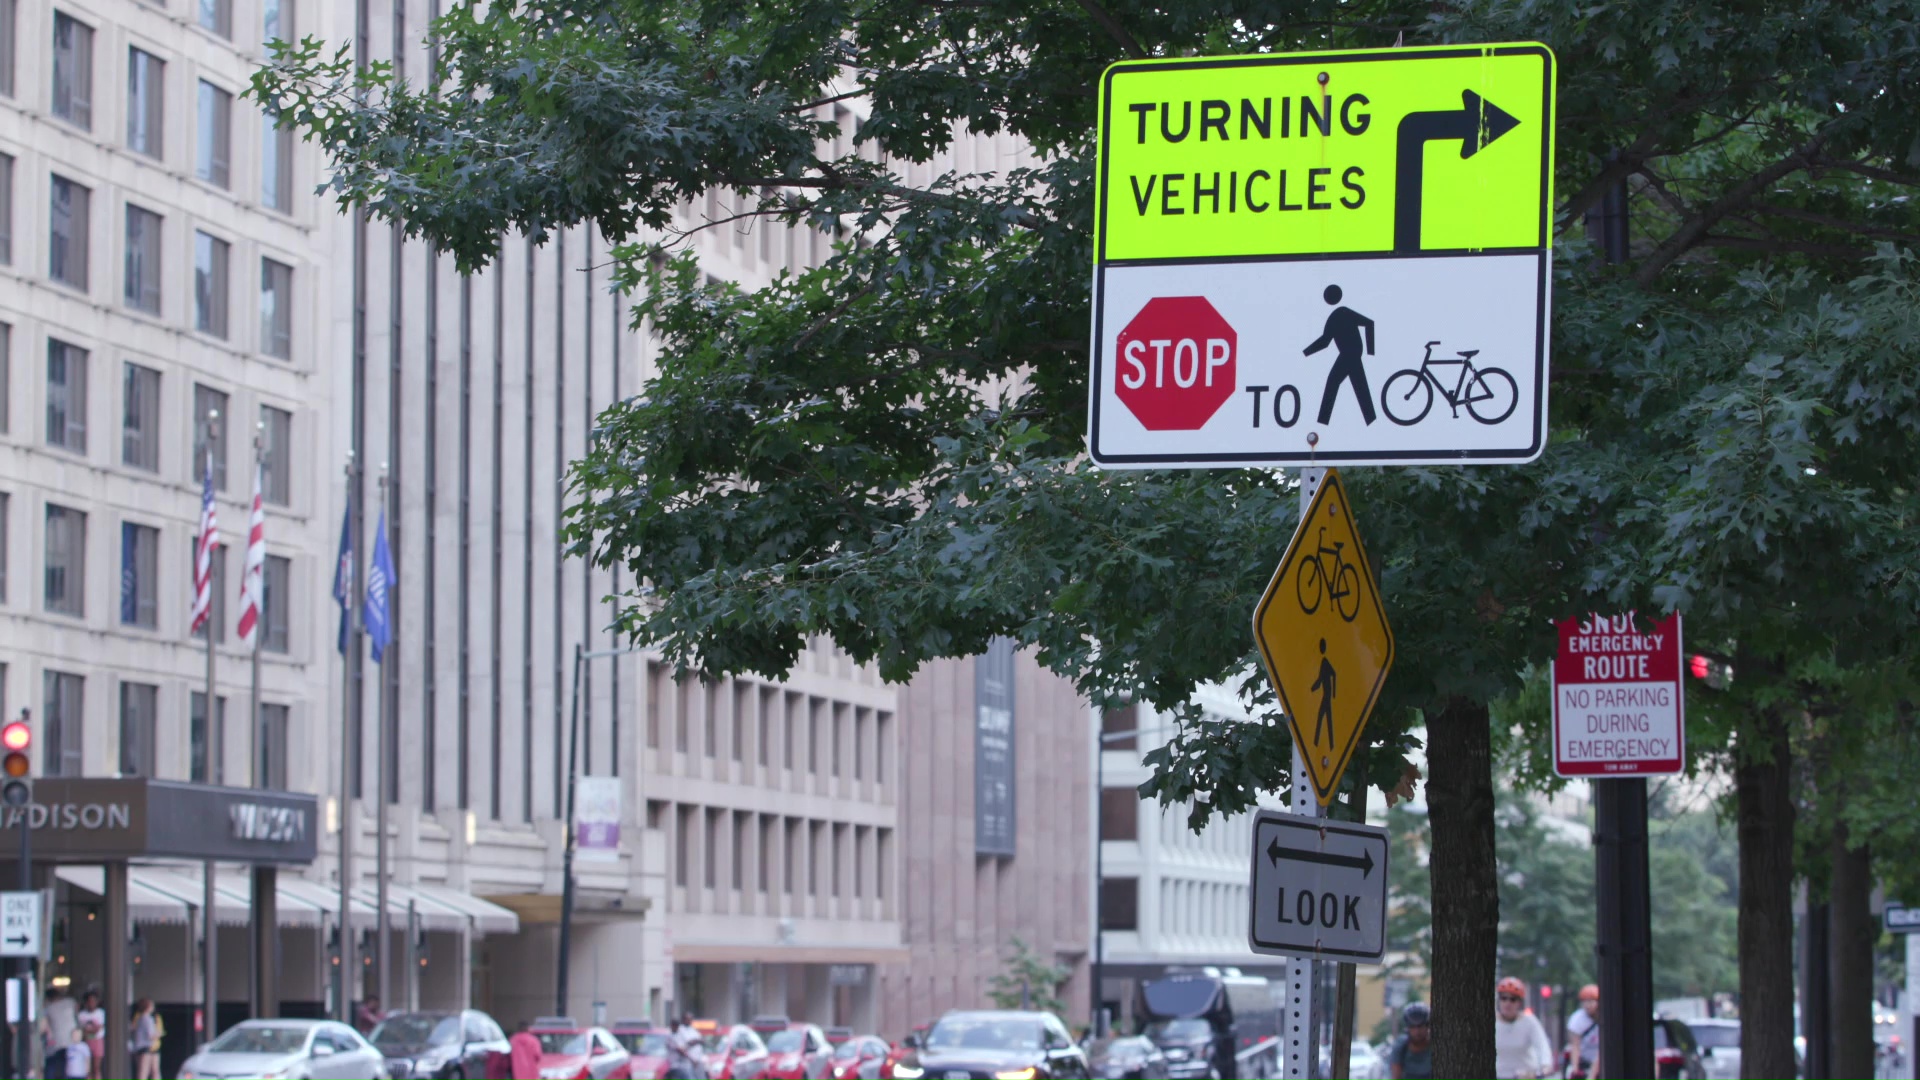 Bike lane signs and road markings